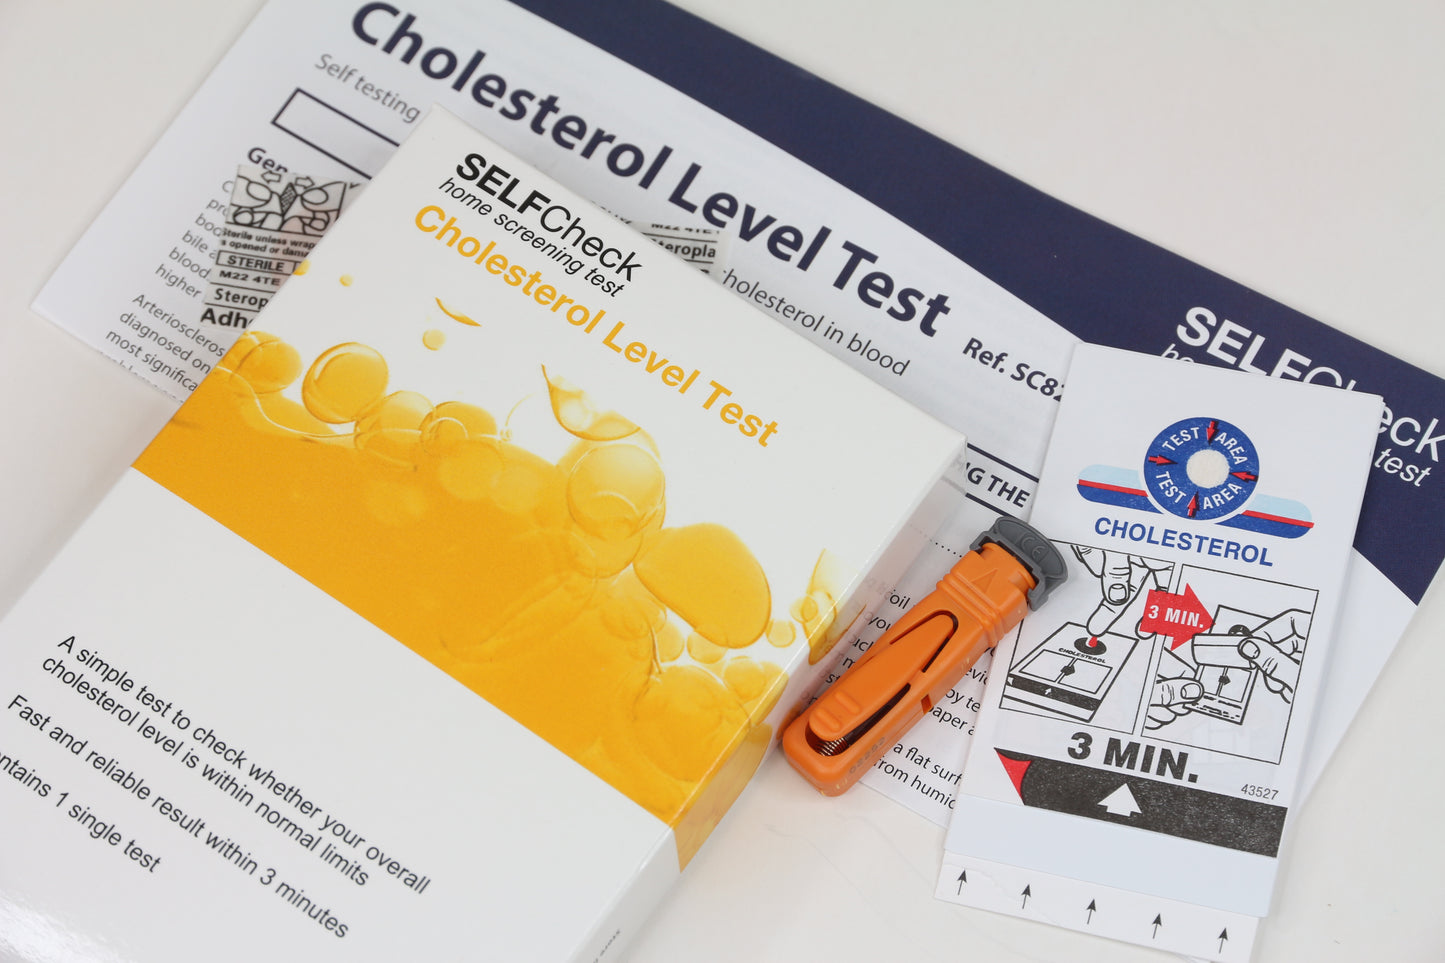 SELFCheck Cholesterol Test kit